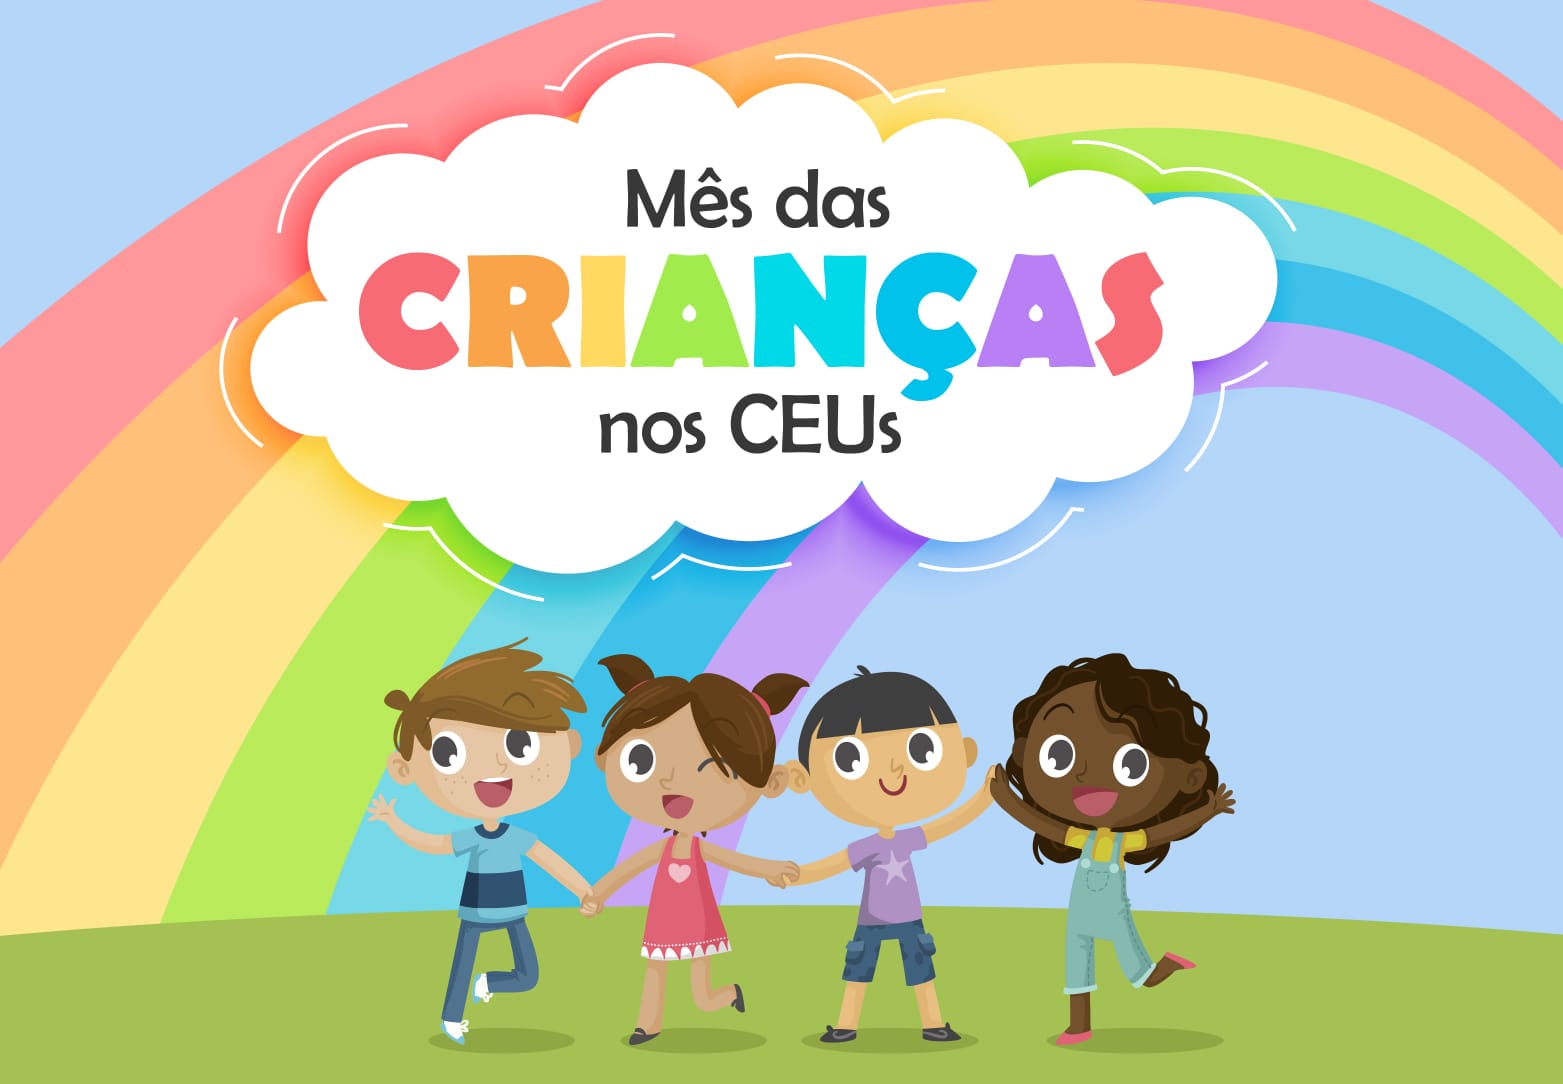 Curso online de Brincadeiras e Jogos Infantis - Portal Educacao